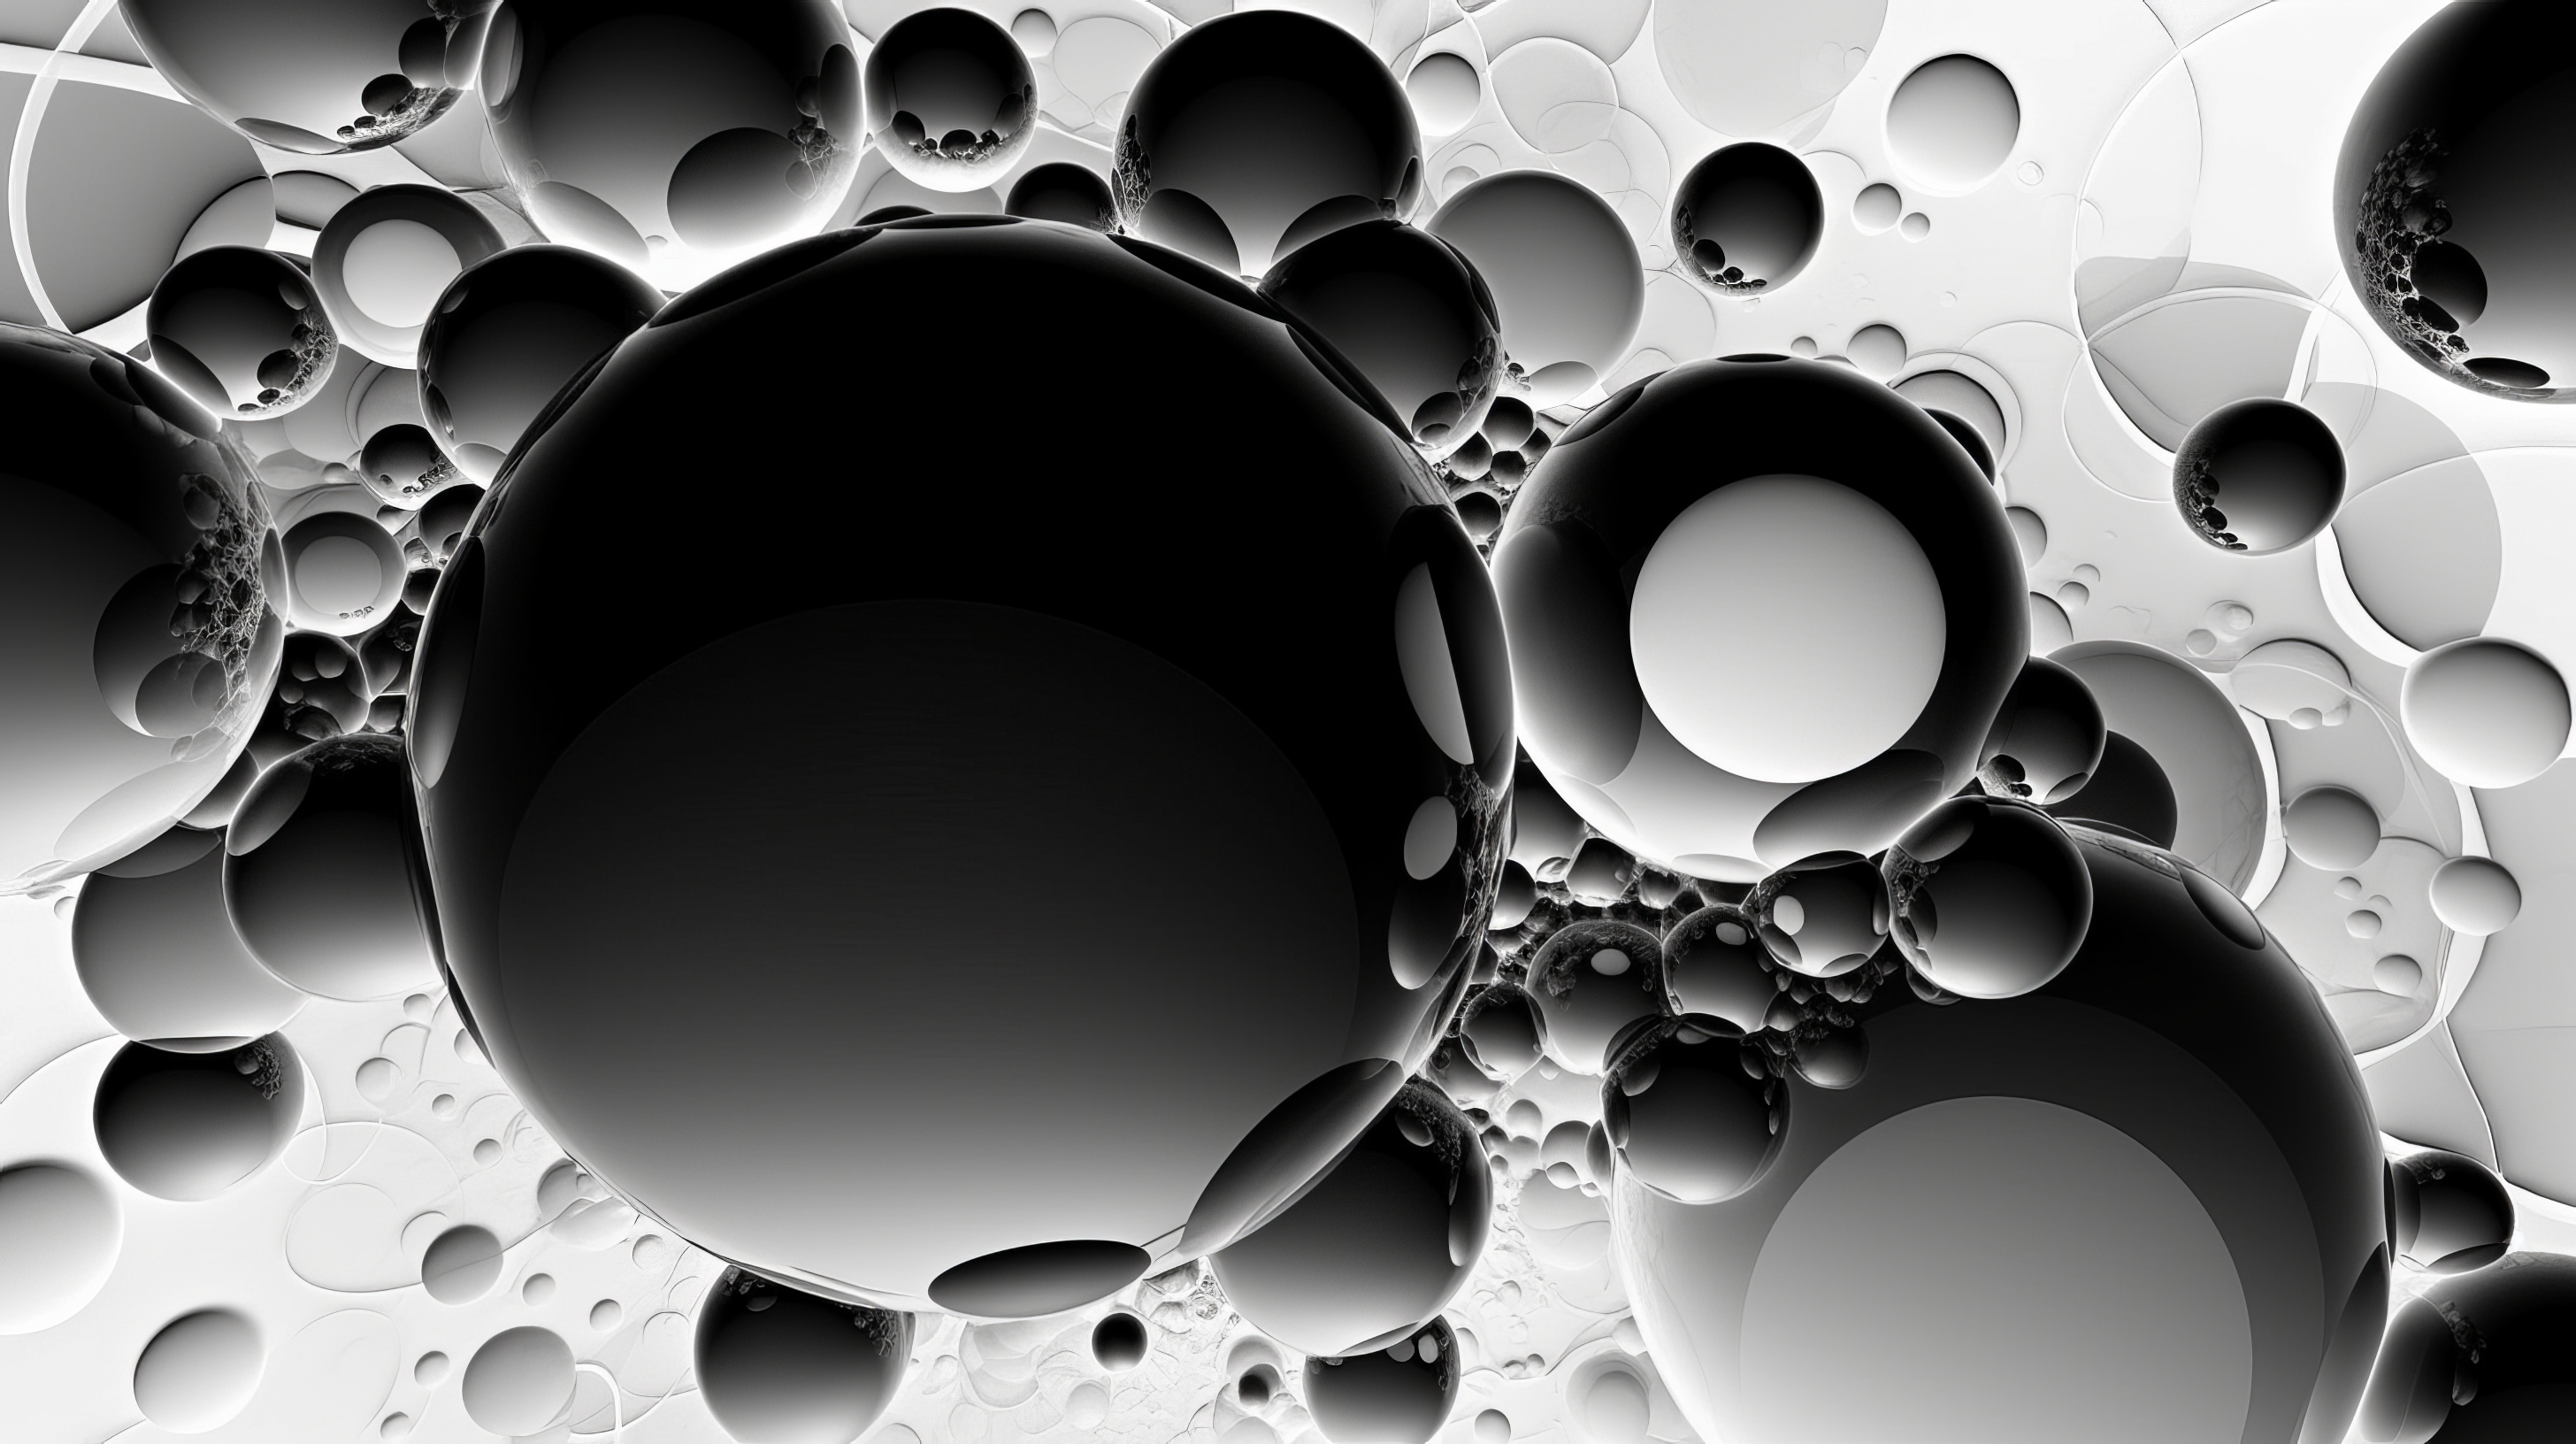 General 2912x1632 AI art abstract bubbles black white monochrome digital art